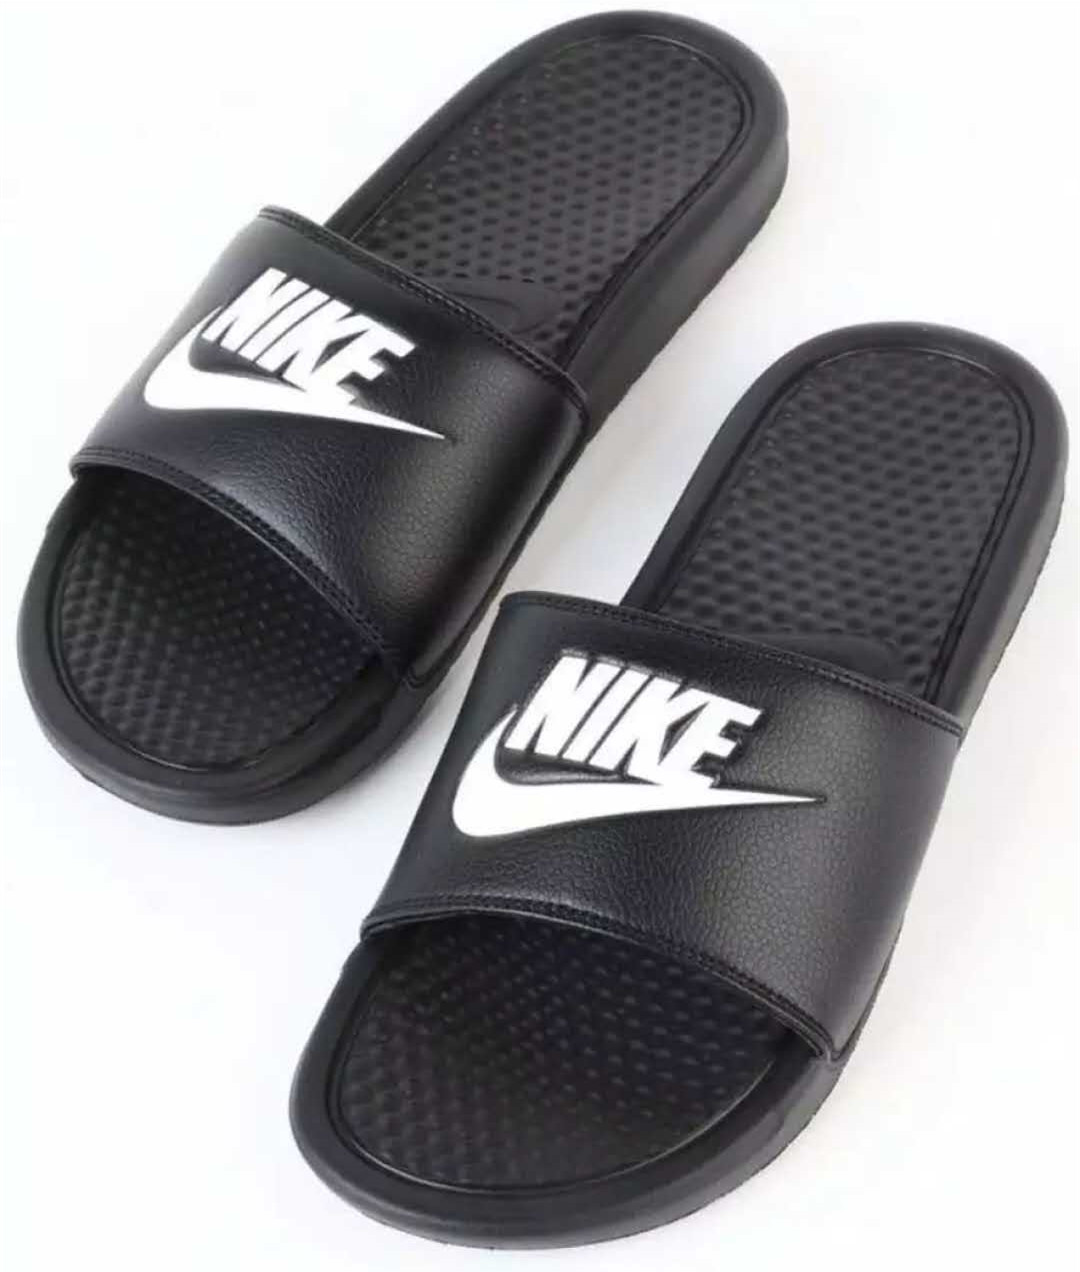 nike new sandals 2020